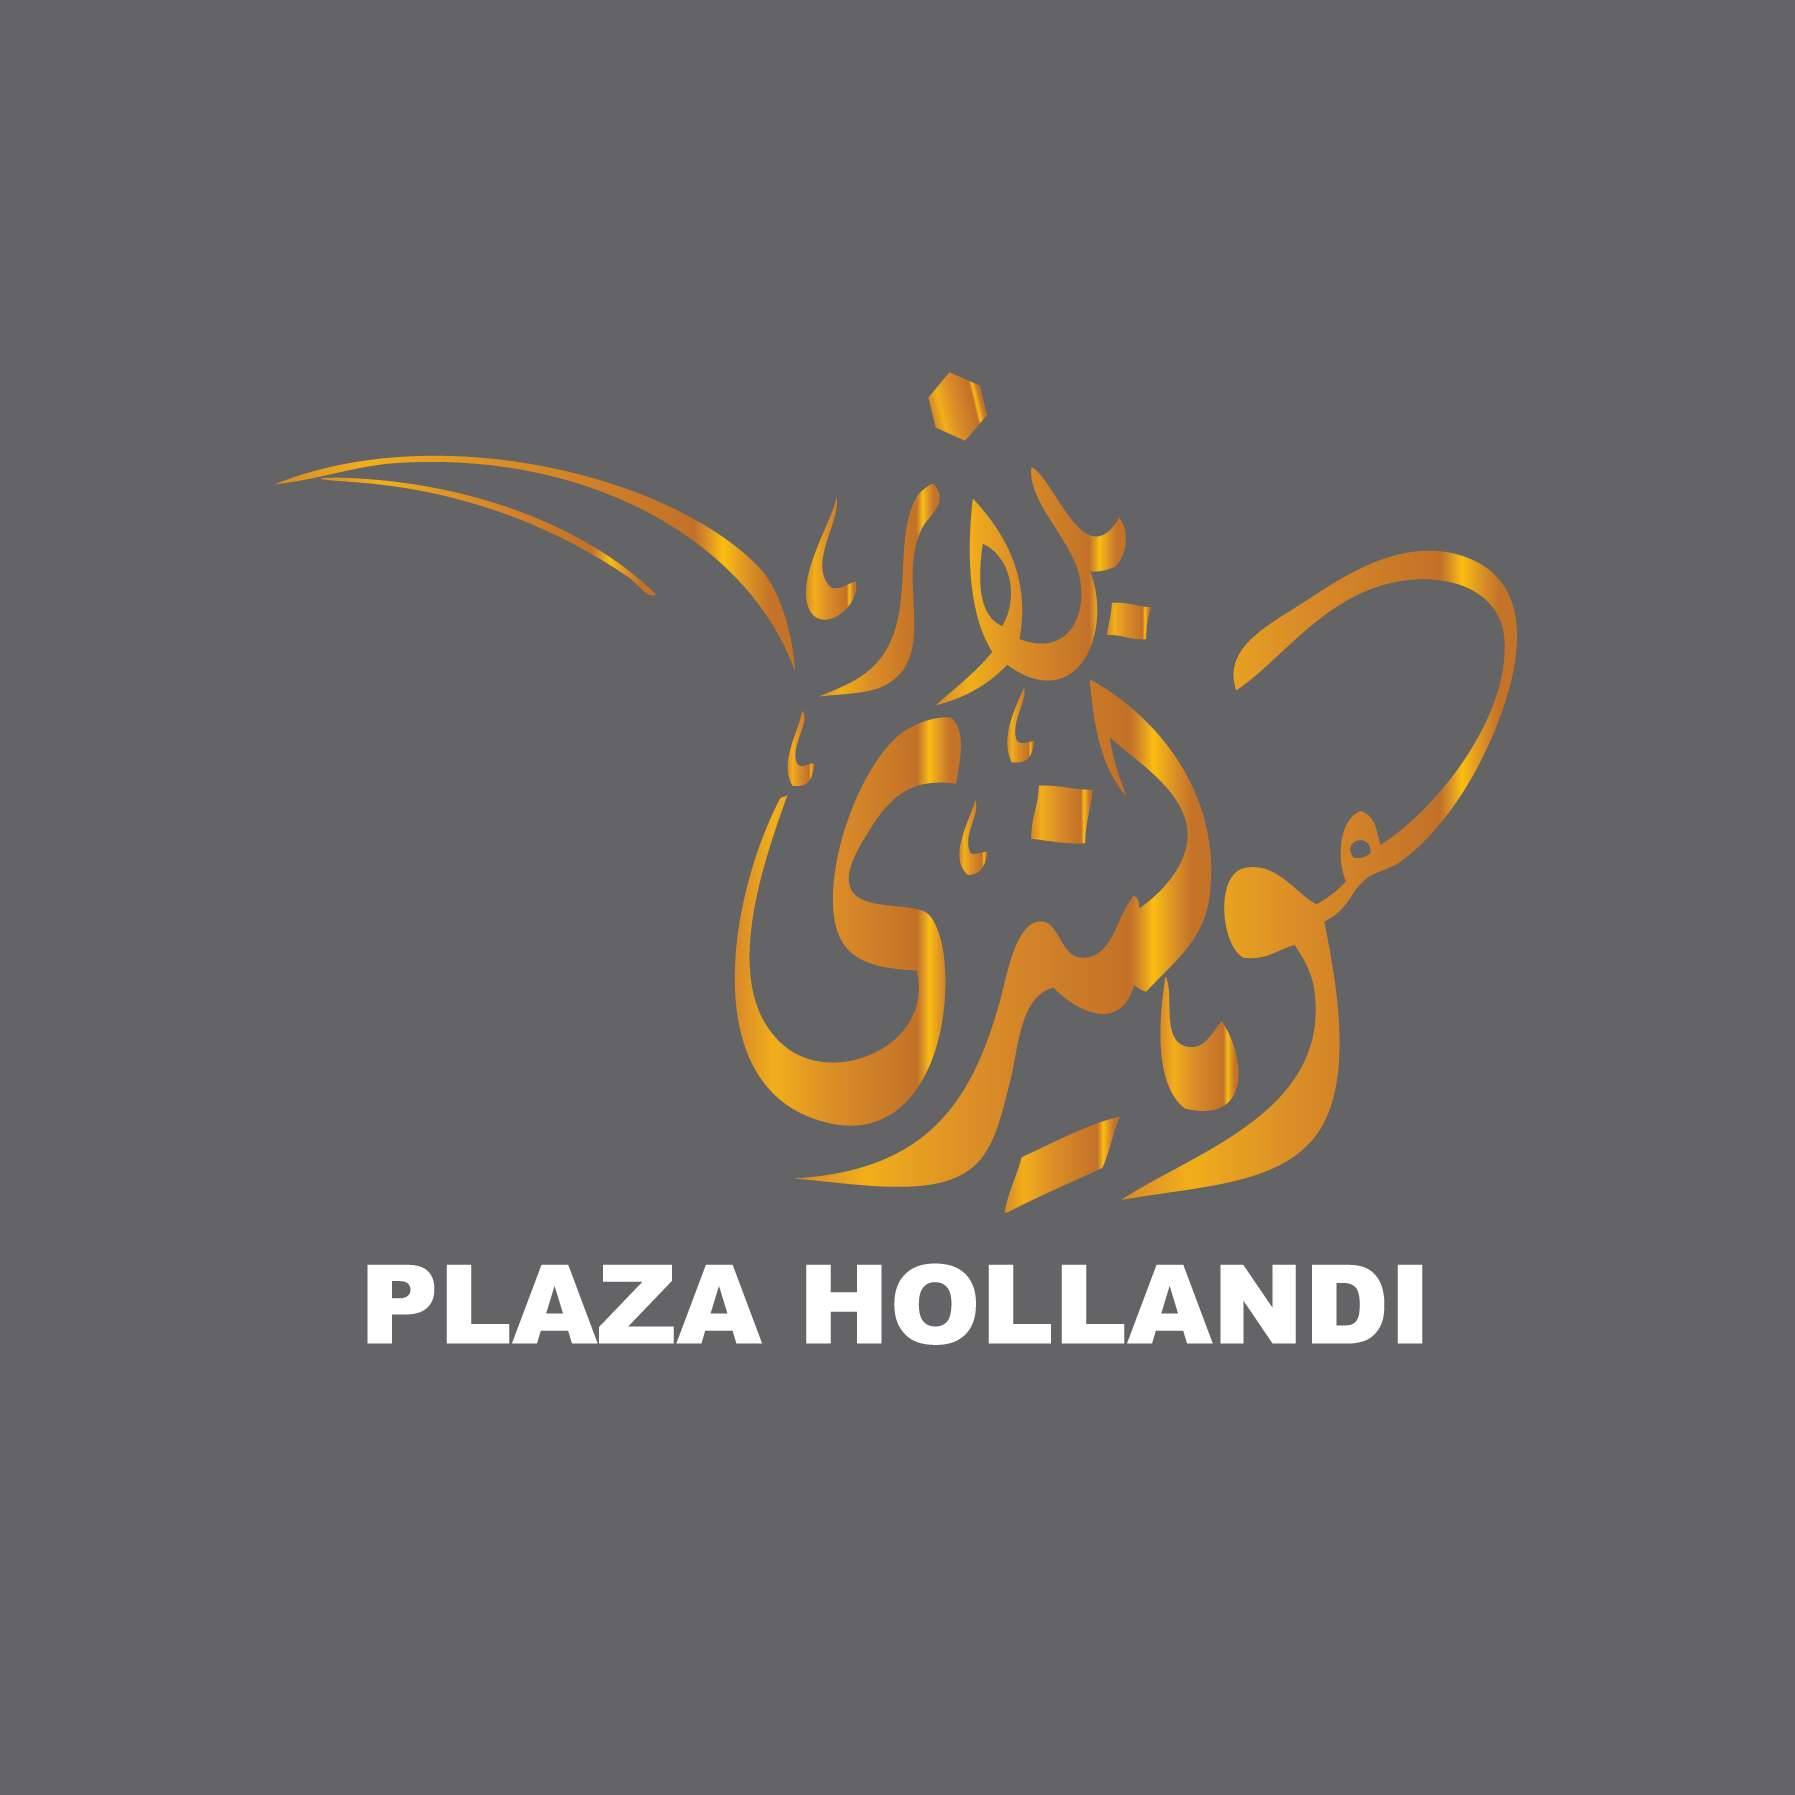 Plaza Hollandi logo